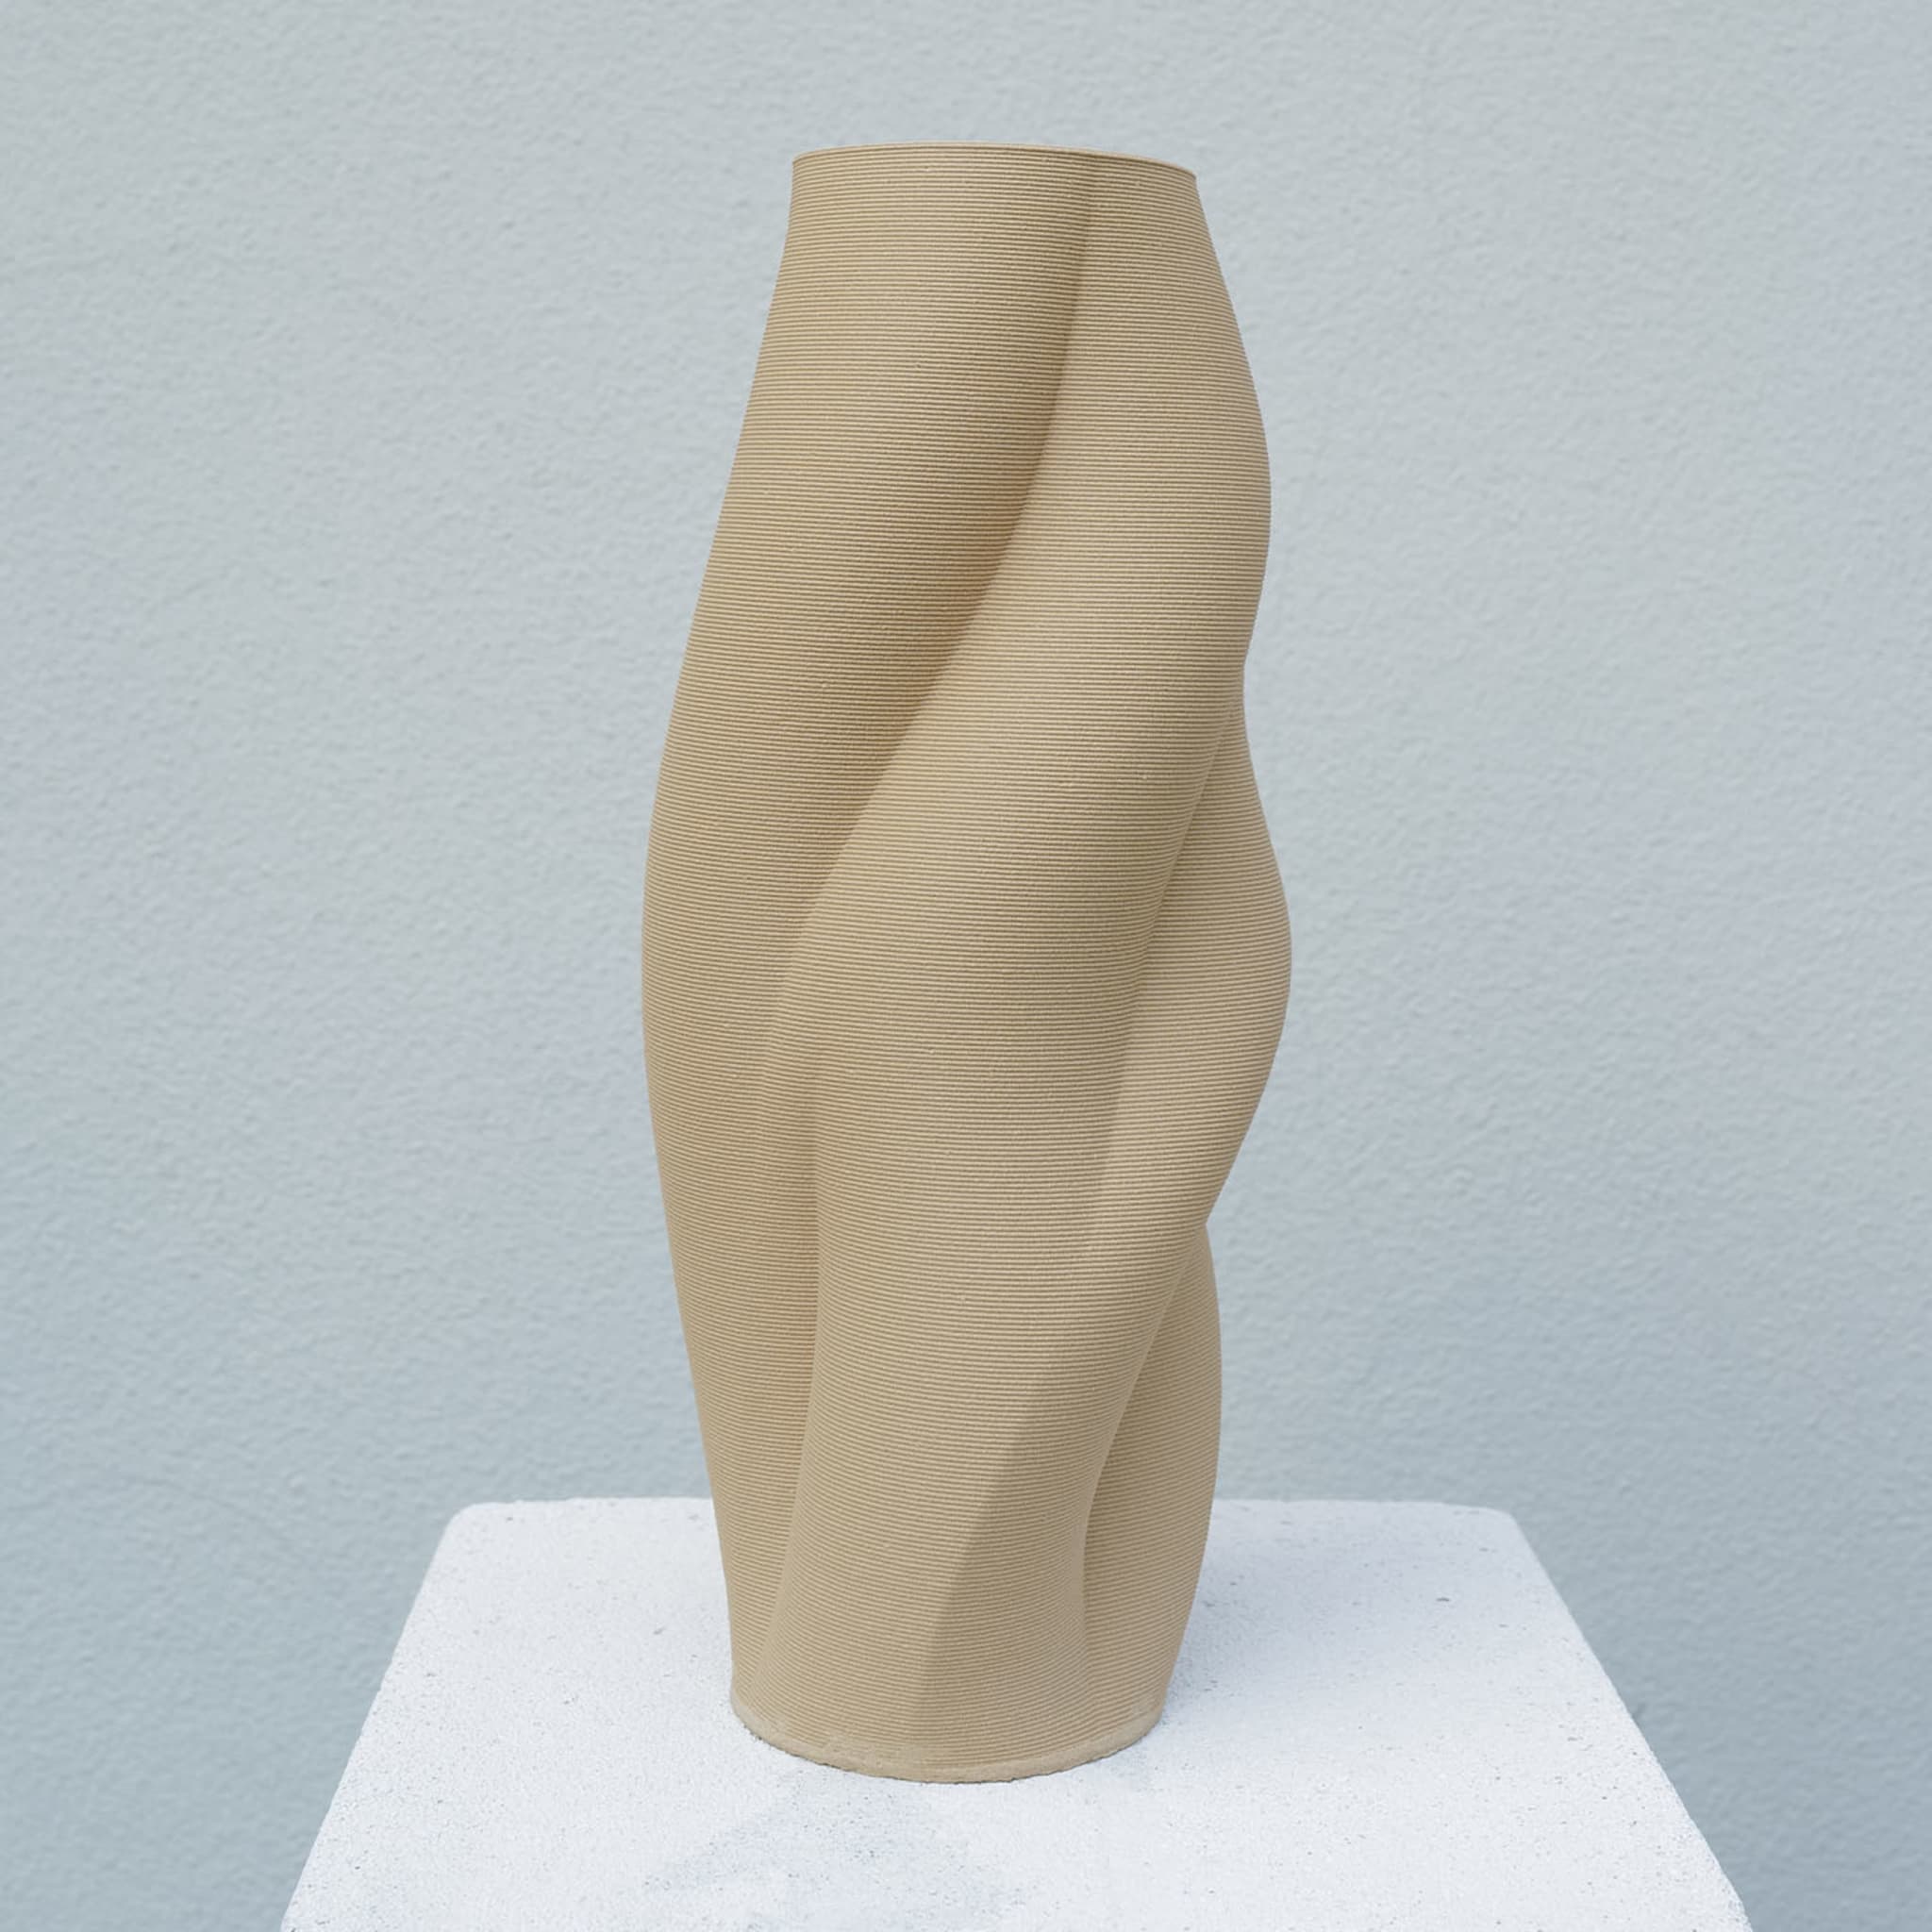 Female Raw Cermiac Vase - Alternative view 1